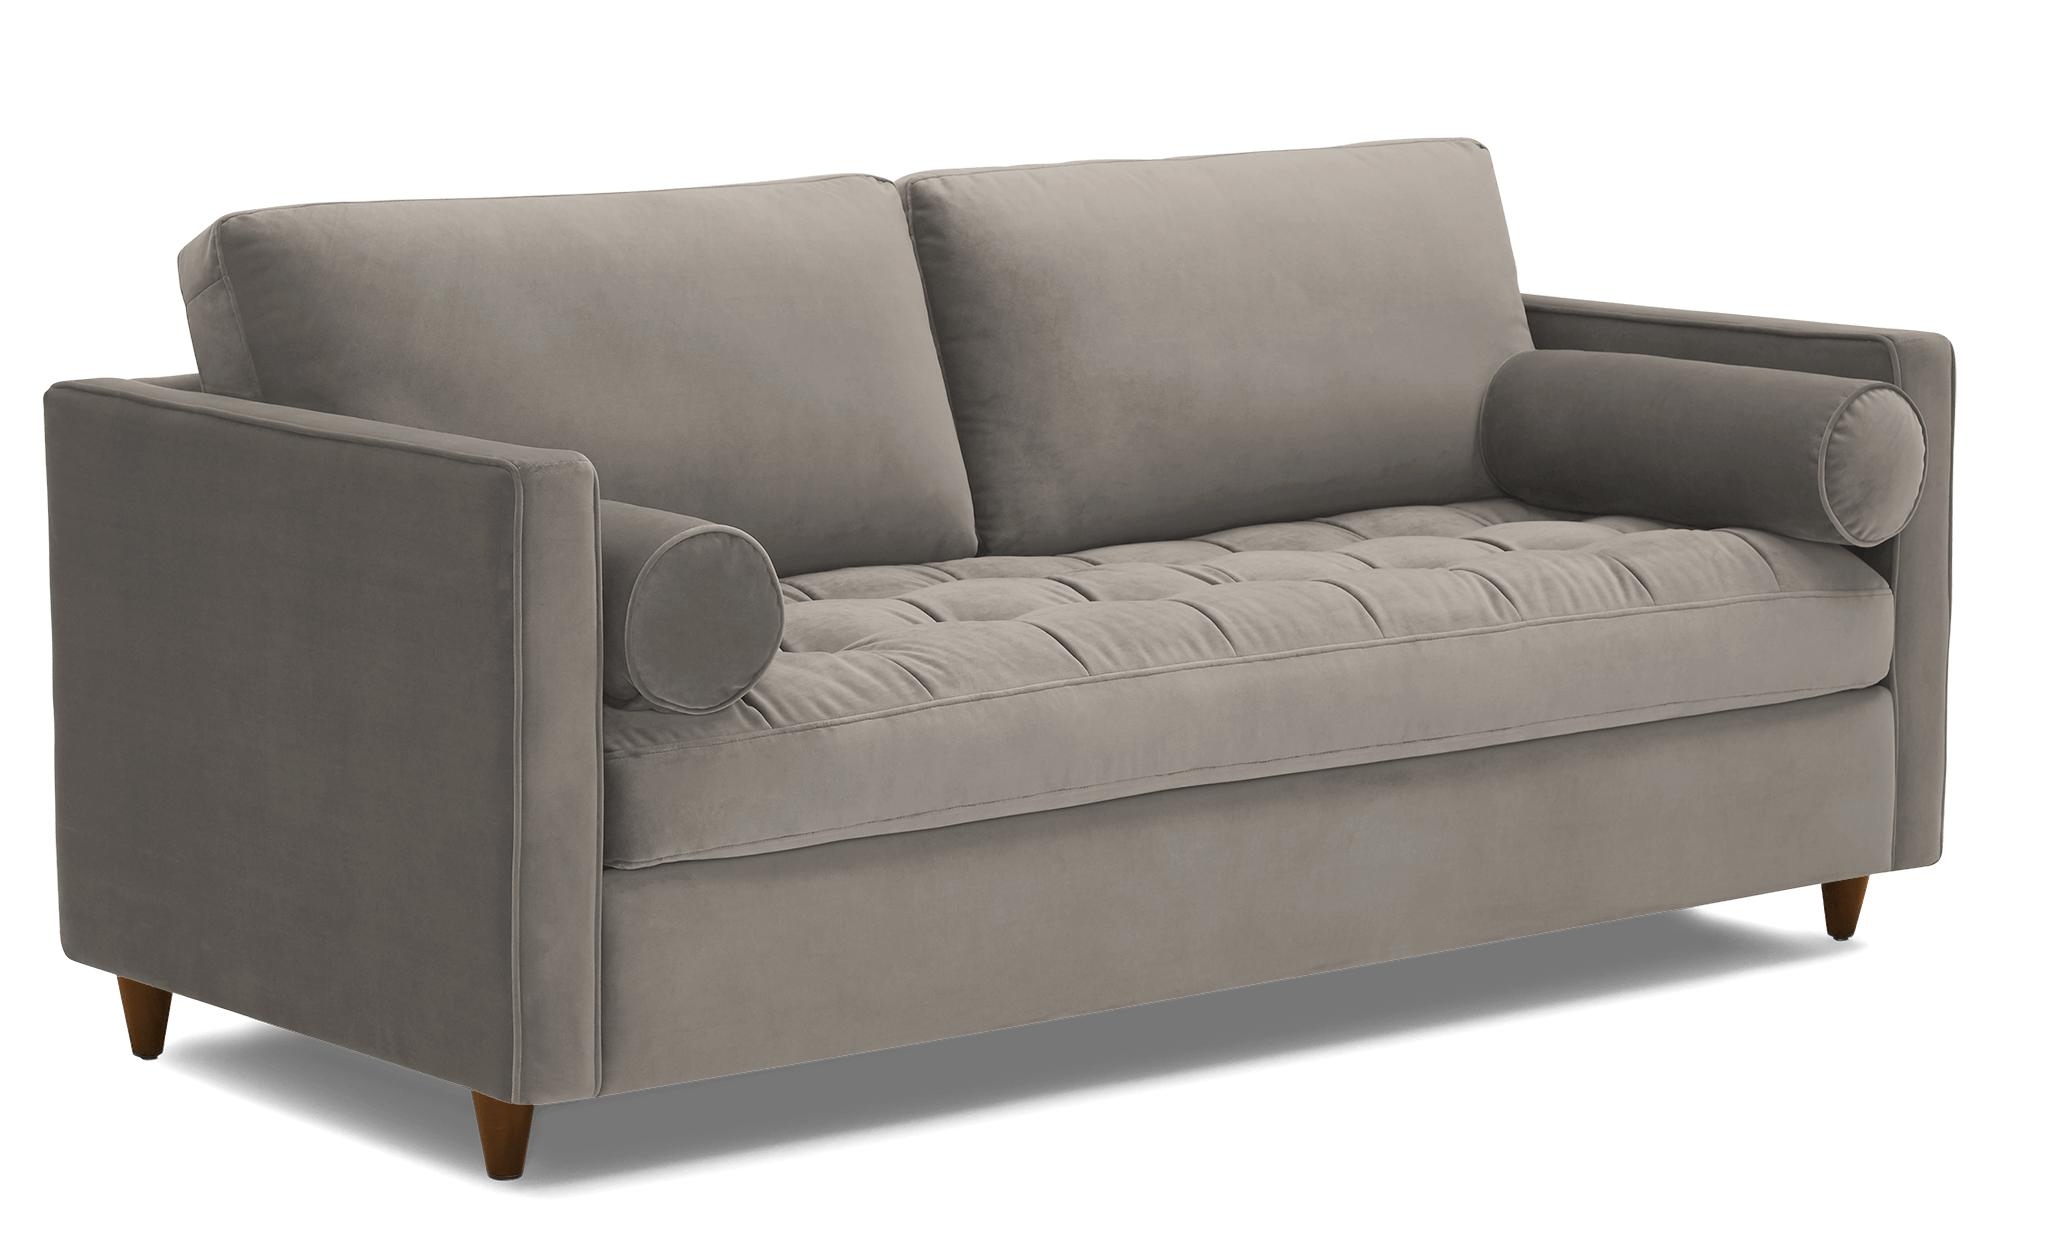 Beige/White Briar Mid Century Modern Sleeper Sofa - Prime Stone - Mocha - Image 1